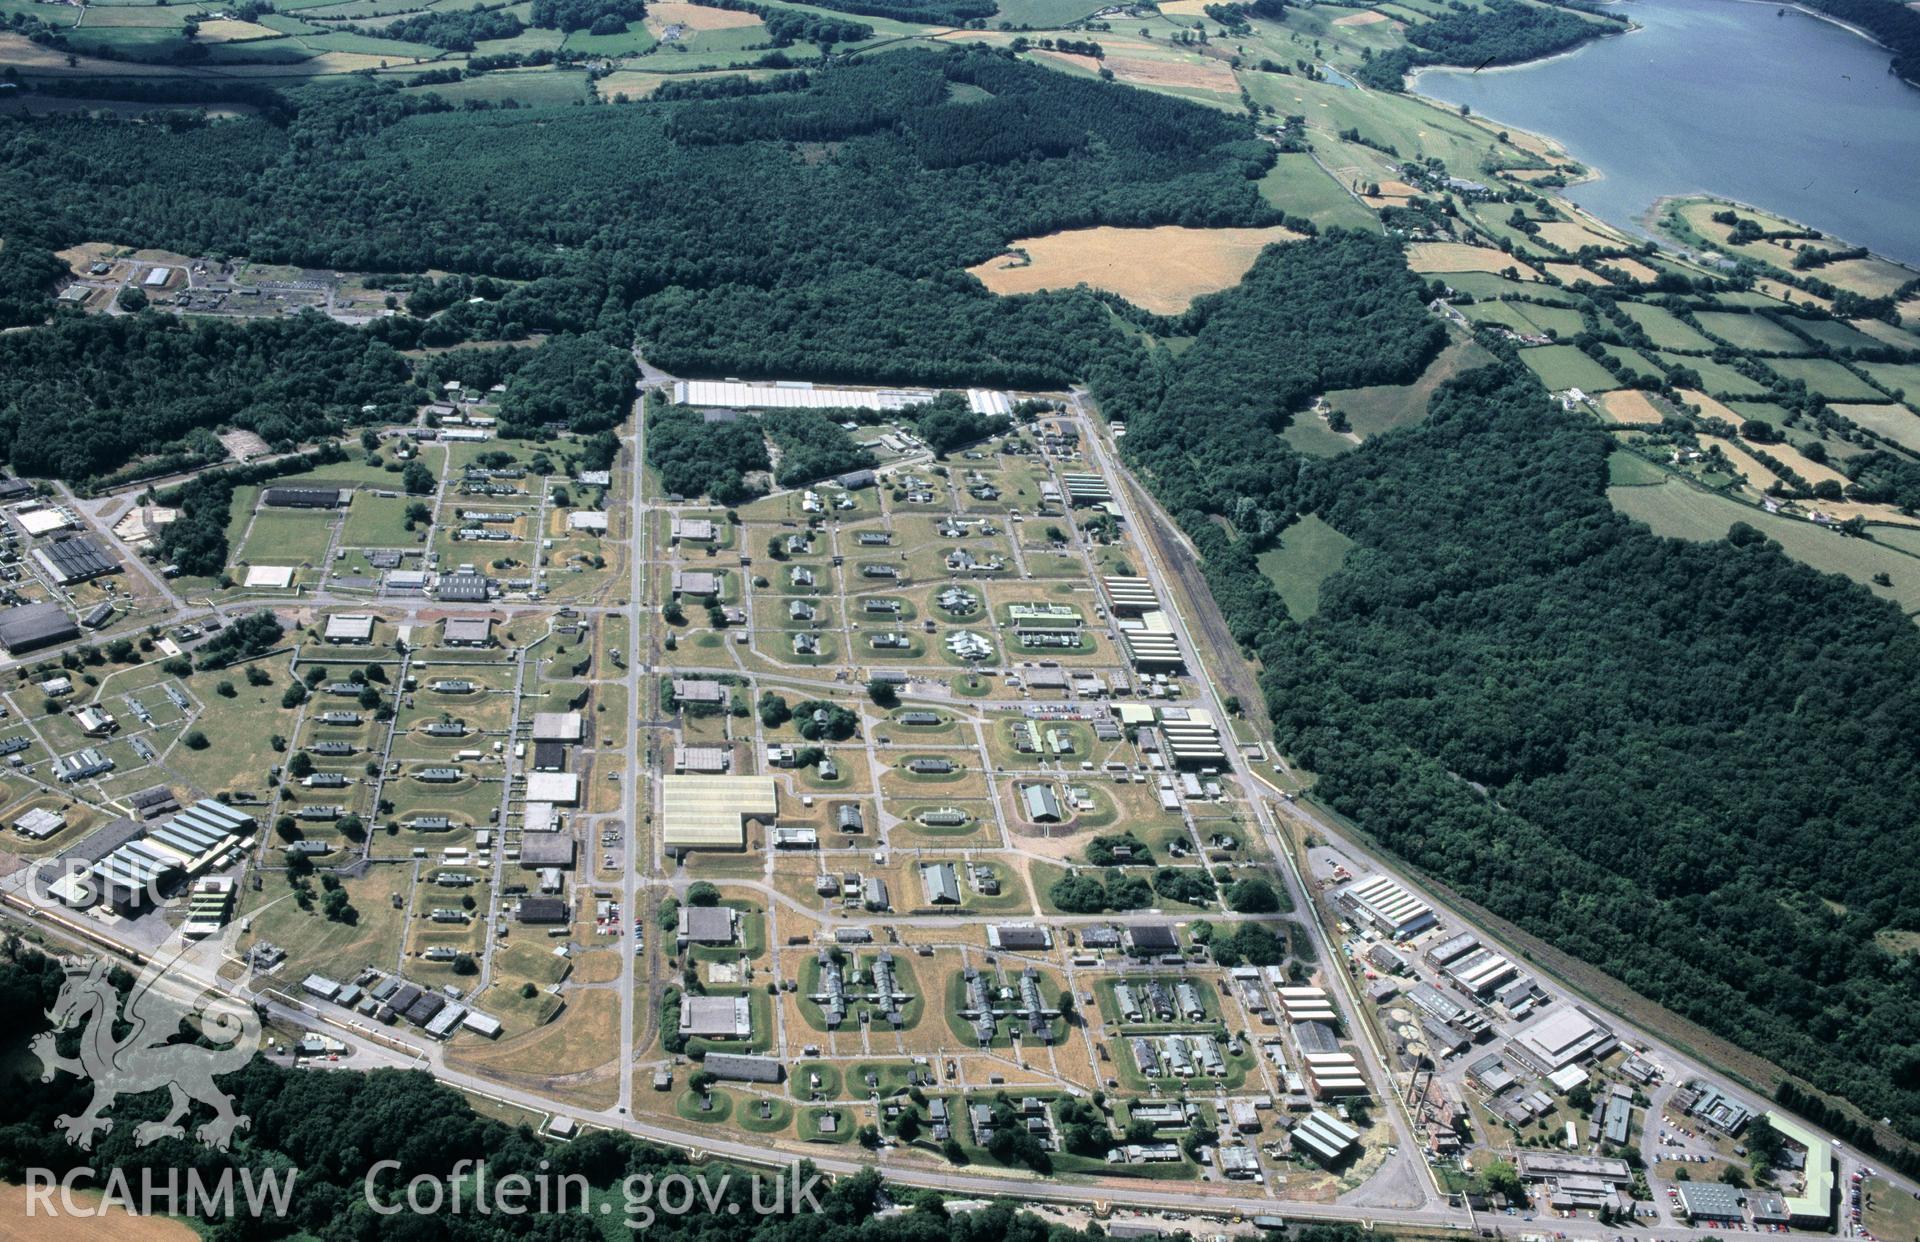 Slide of RCAHMW colour oblique aerial photograph of Llanbadoc Armament Depot, taken by C.R. Musson, 24/7/1996.